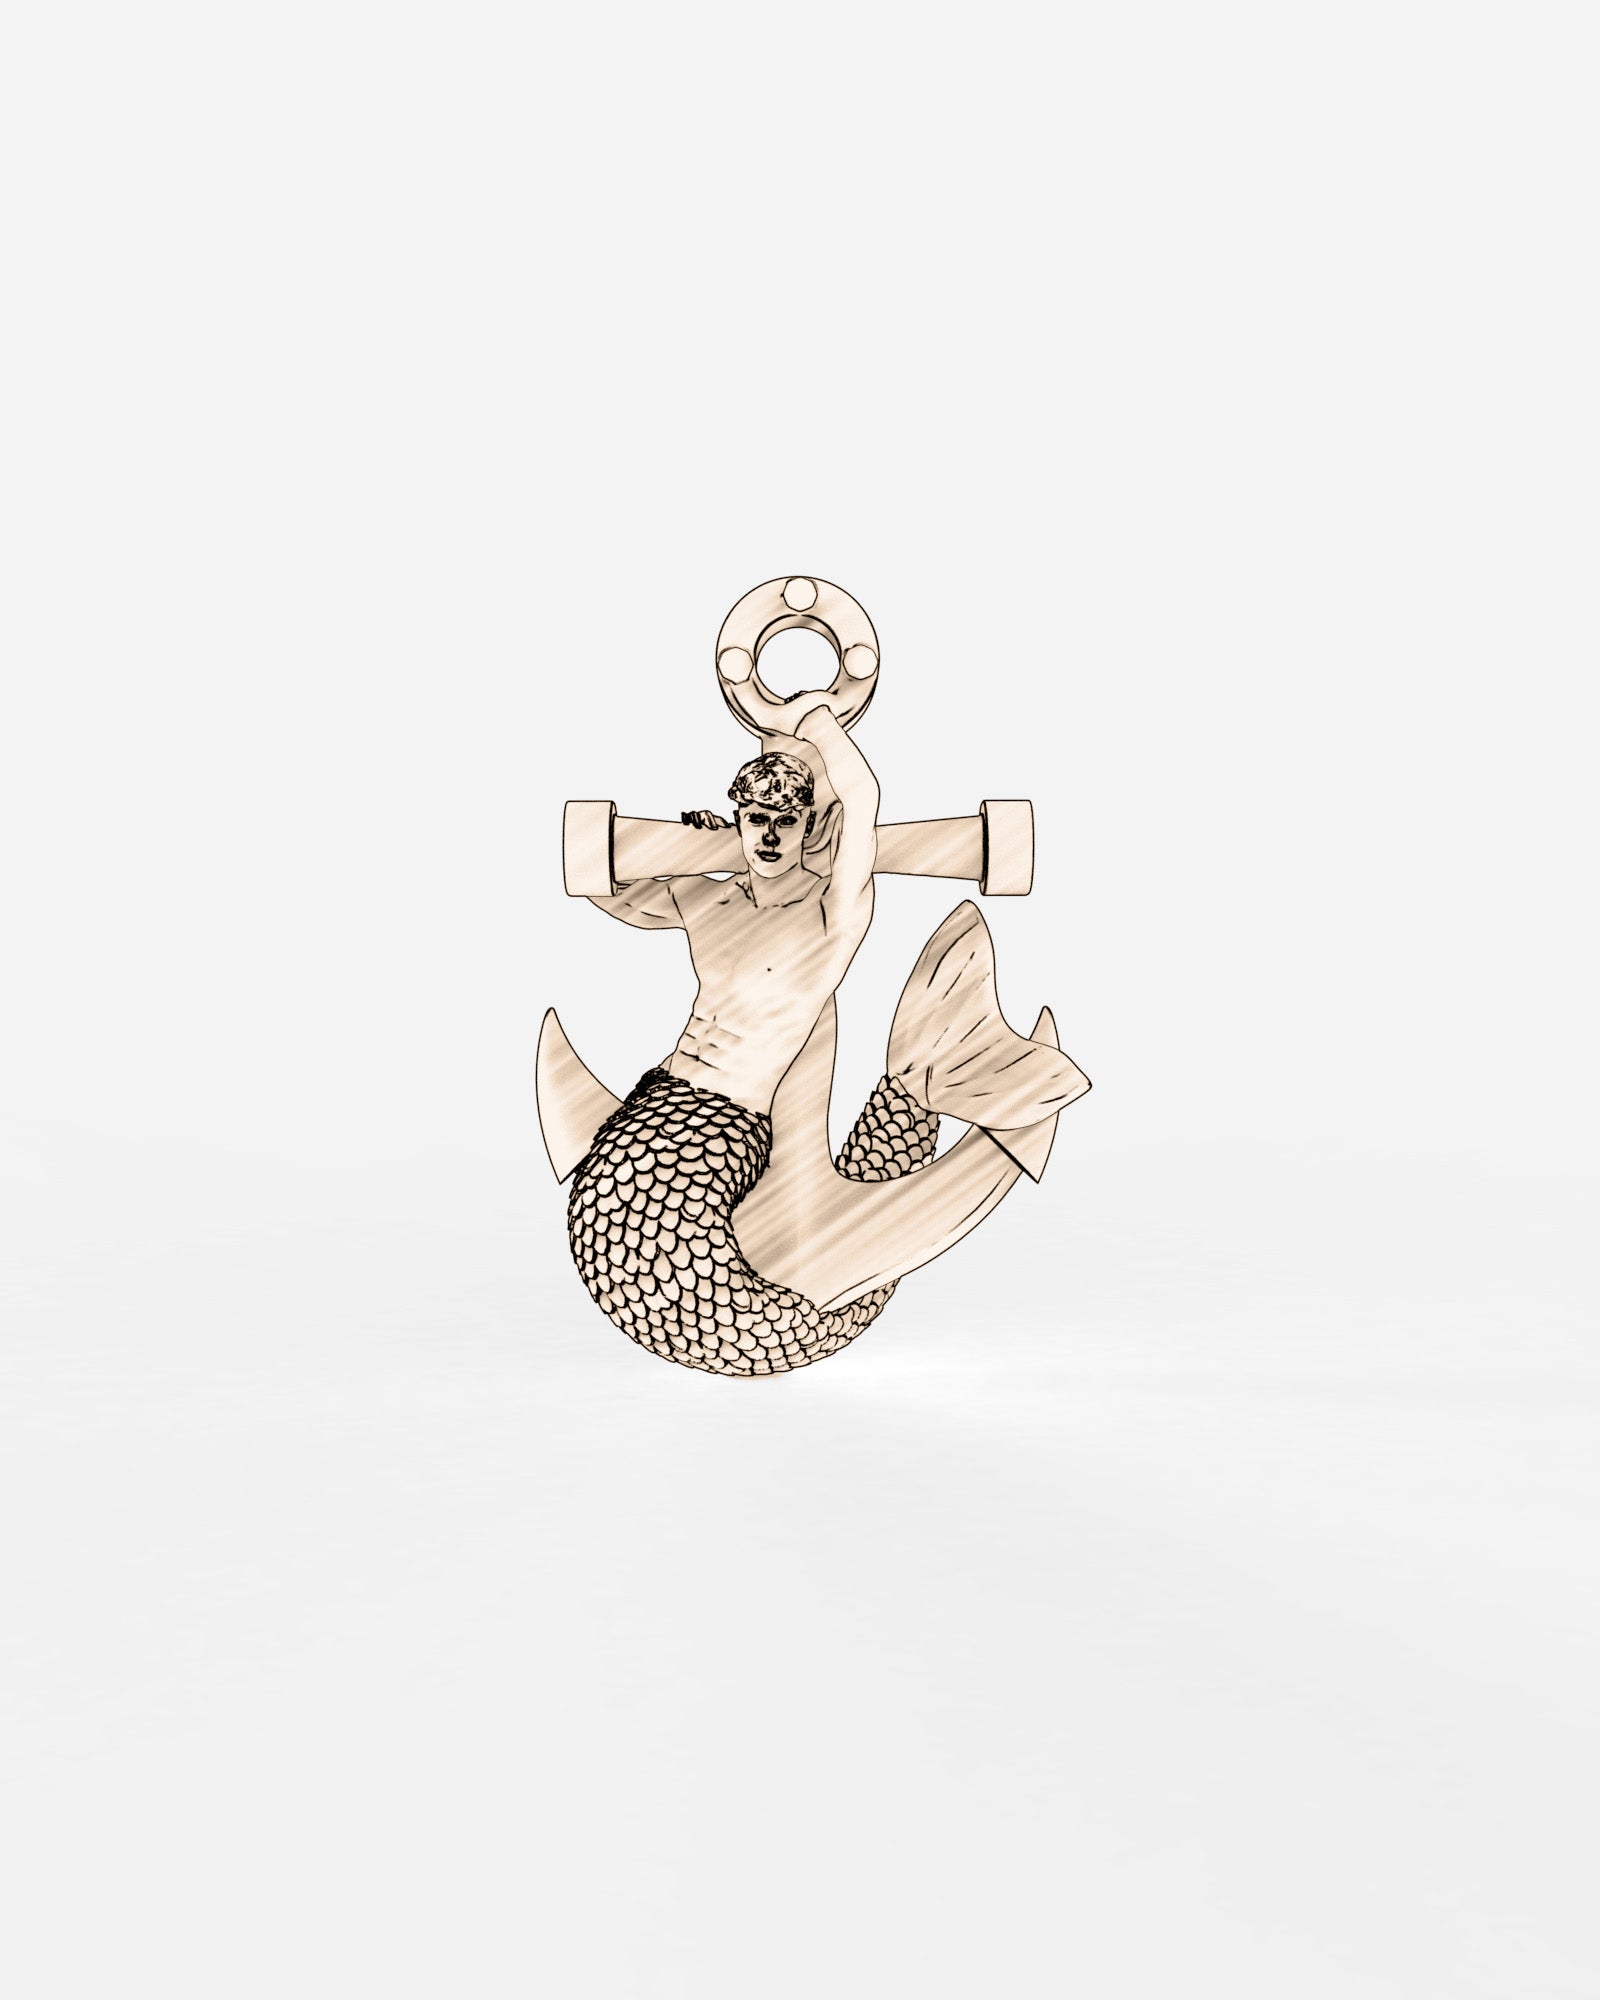 Merman & Anchor Pendant in 9k Rose Gold by Wilson Grant